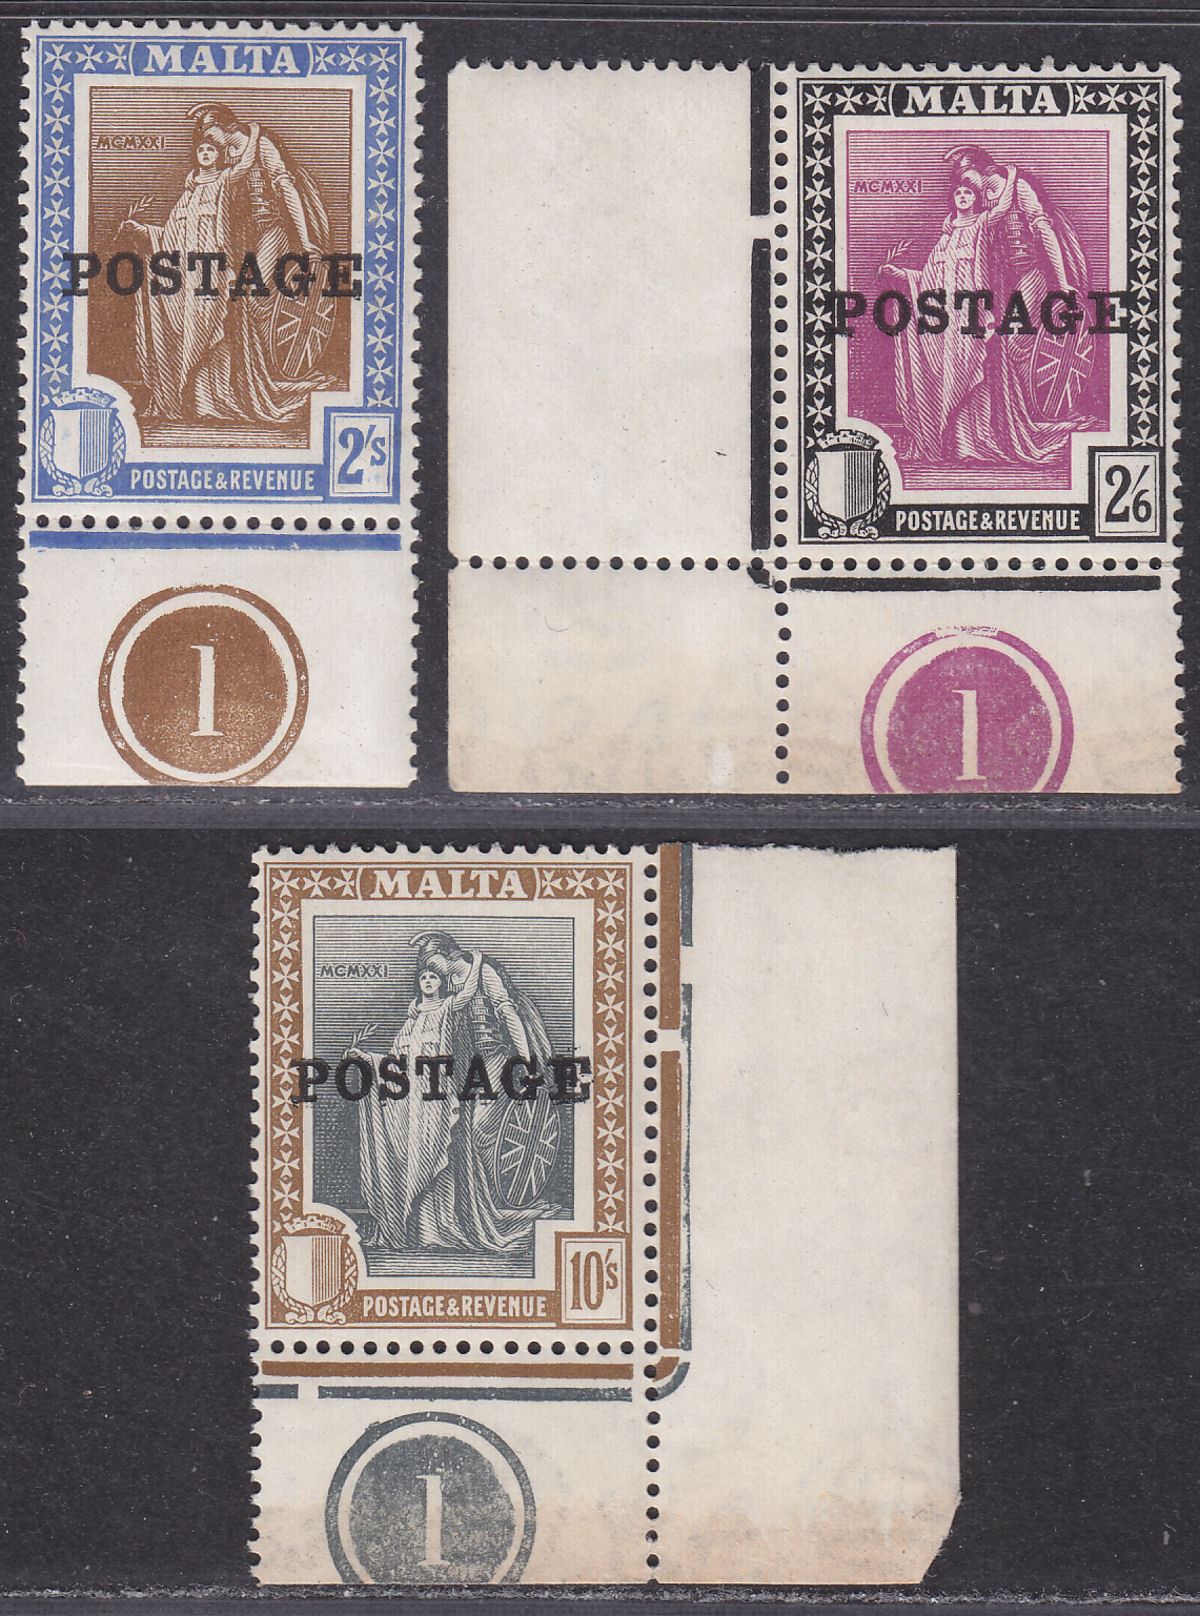 Malta 1926 KGV Figure Postage Overprint Plate 1 2sh, 2sh6d, 10sh Mint cat £80